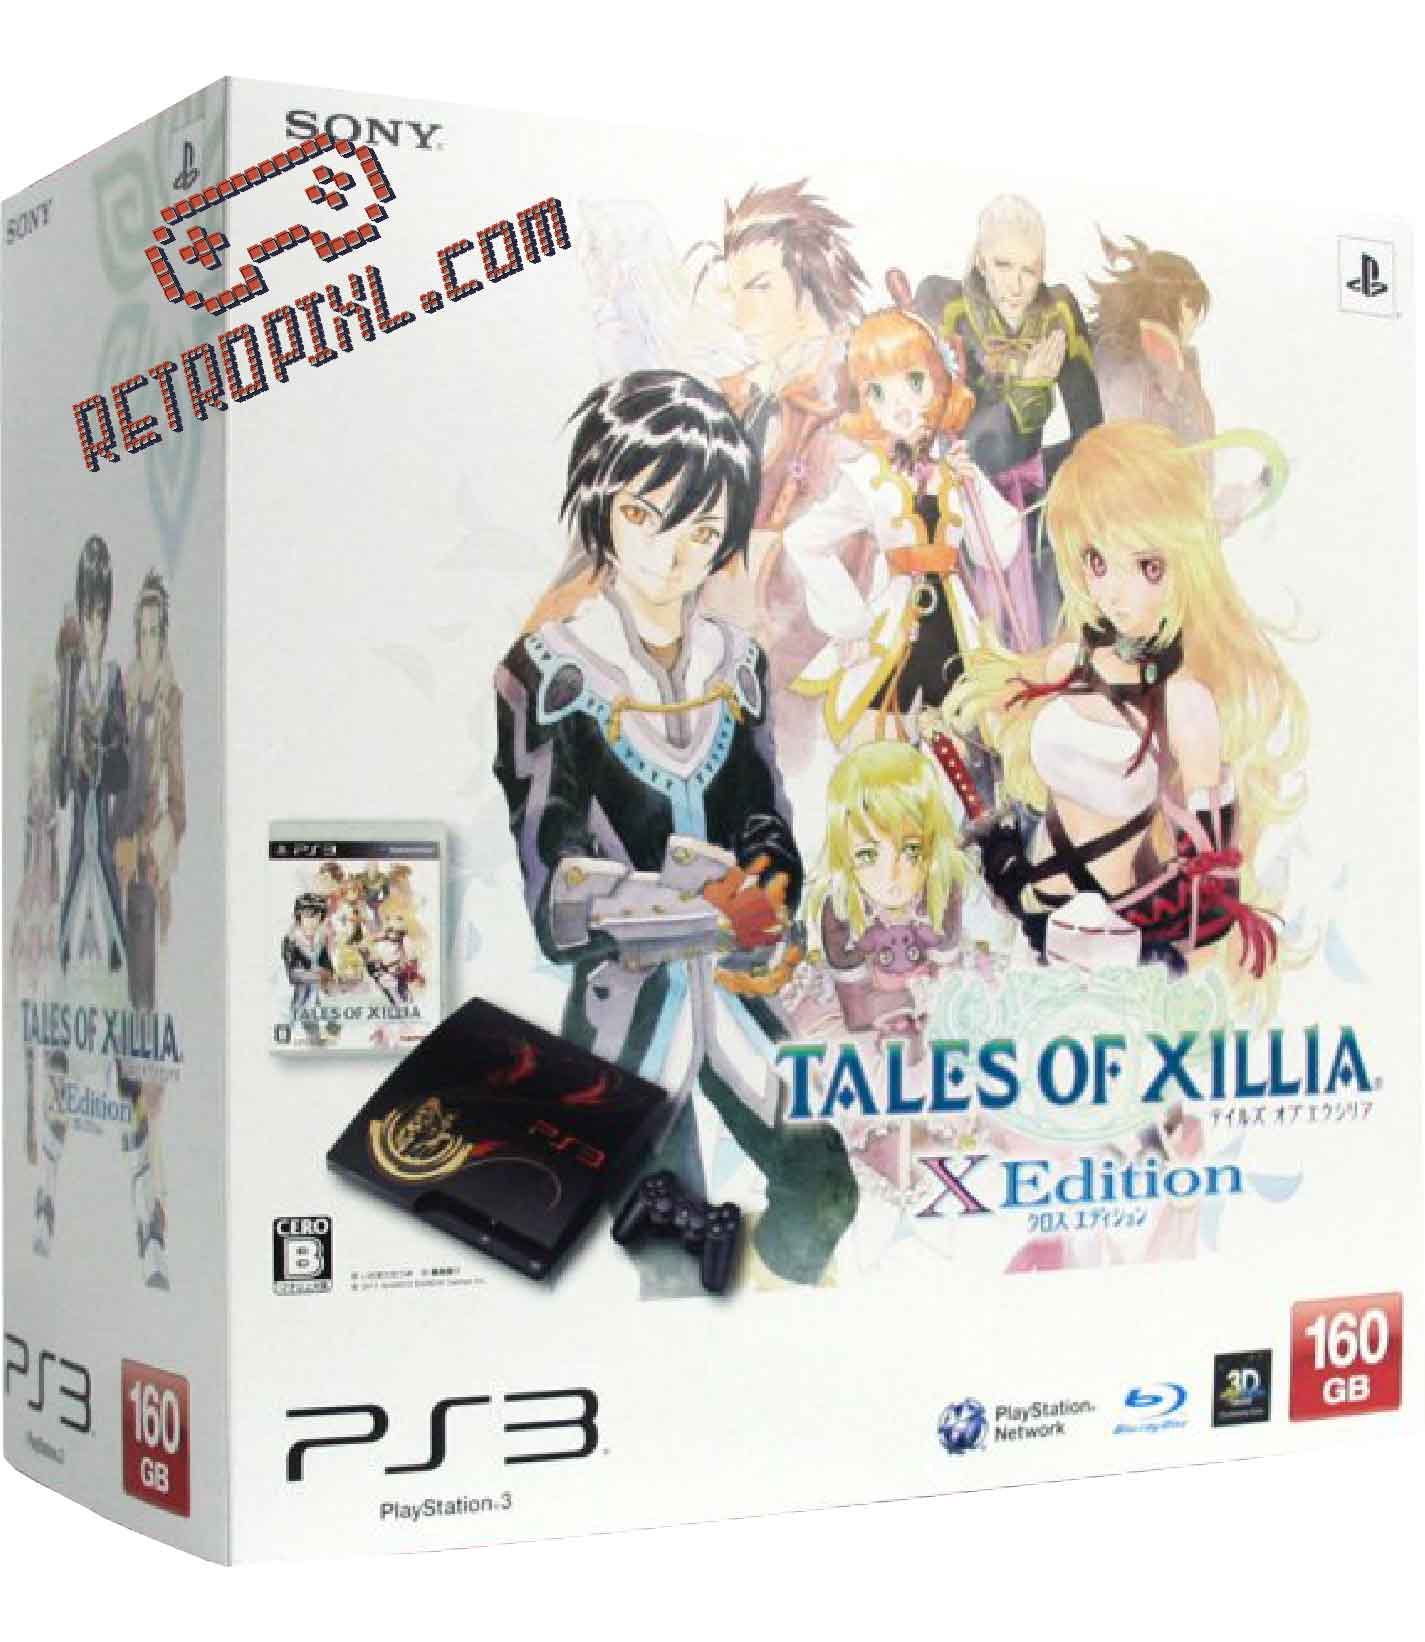 RetroPixl Sony Playstation 3 (PS3) Tales of Xillia Limited Edition 